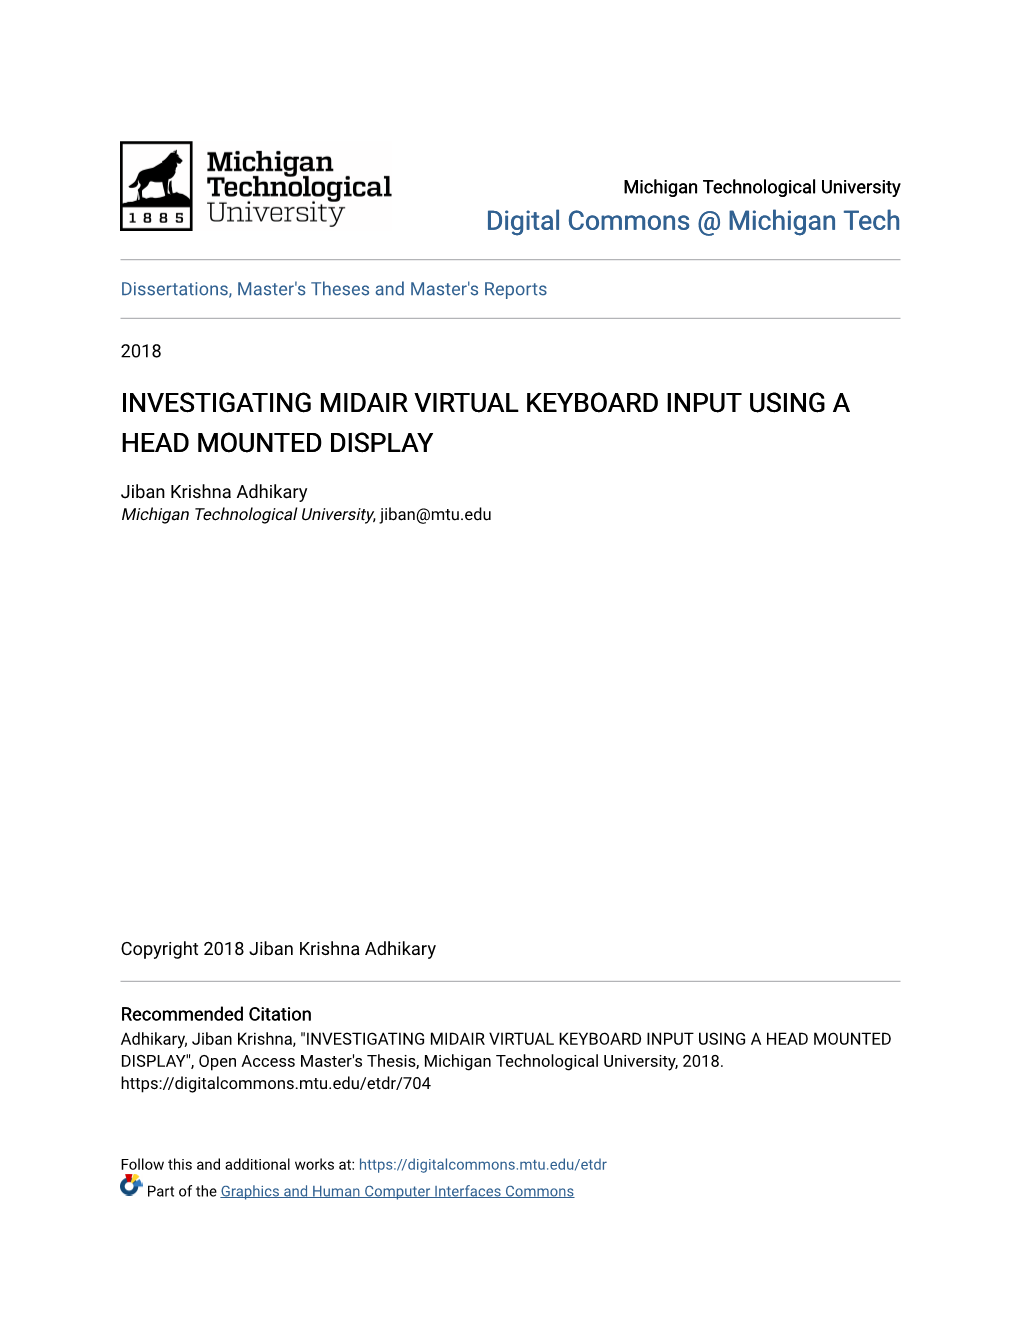 Investigating Midair Virtual Keyboard Input Using a Head Mounted Display